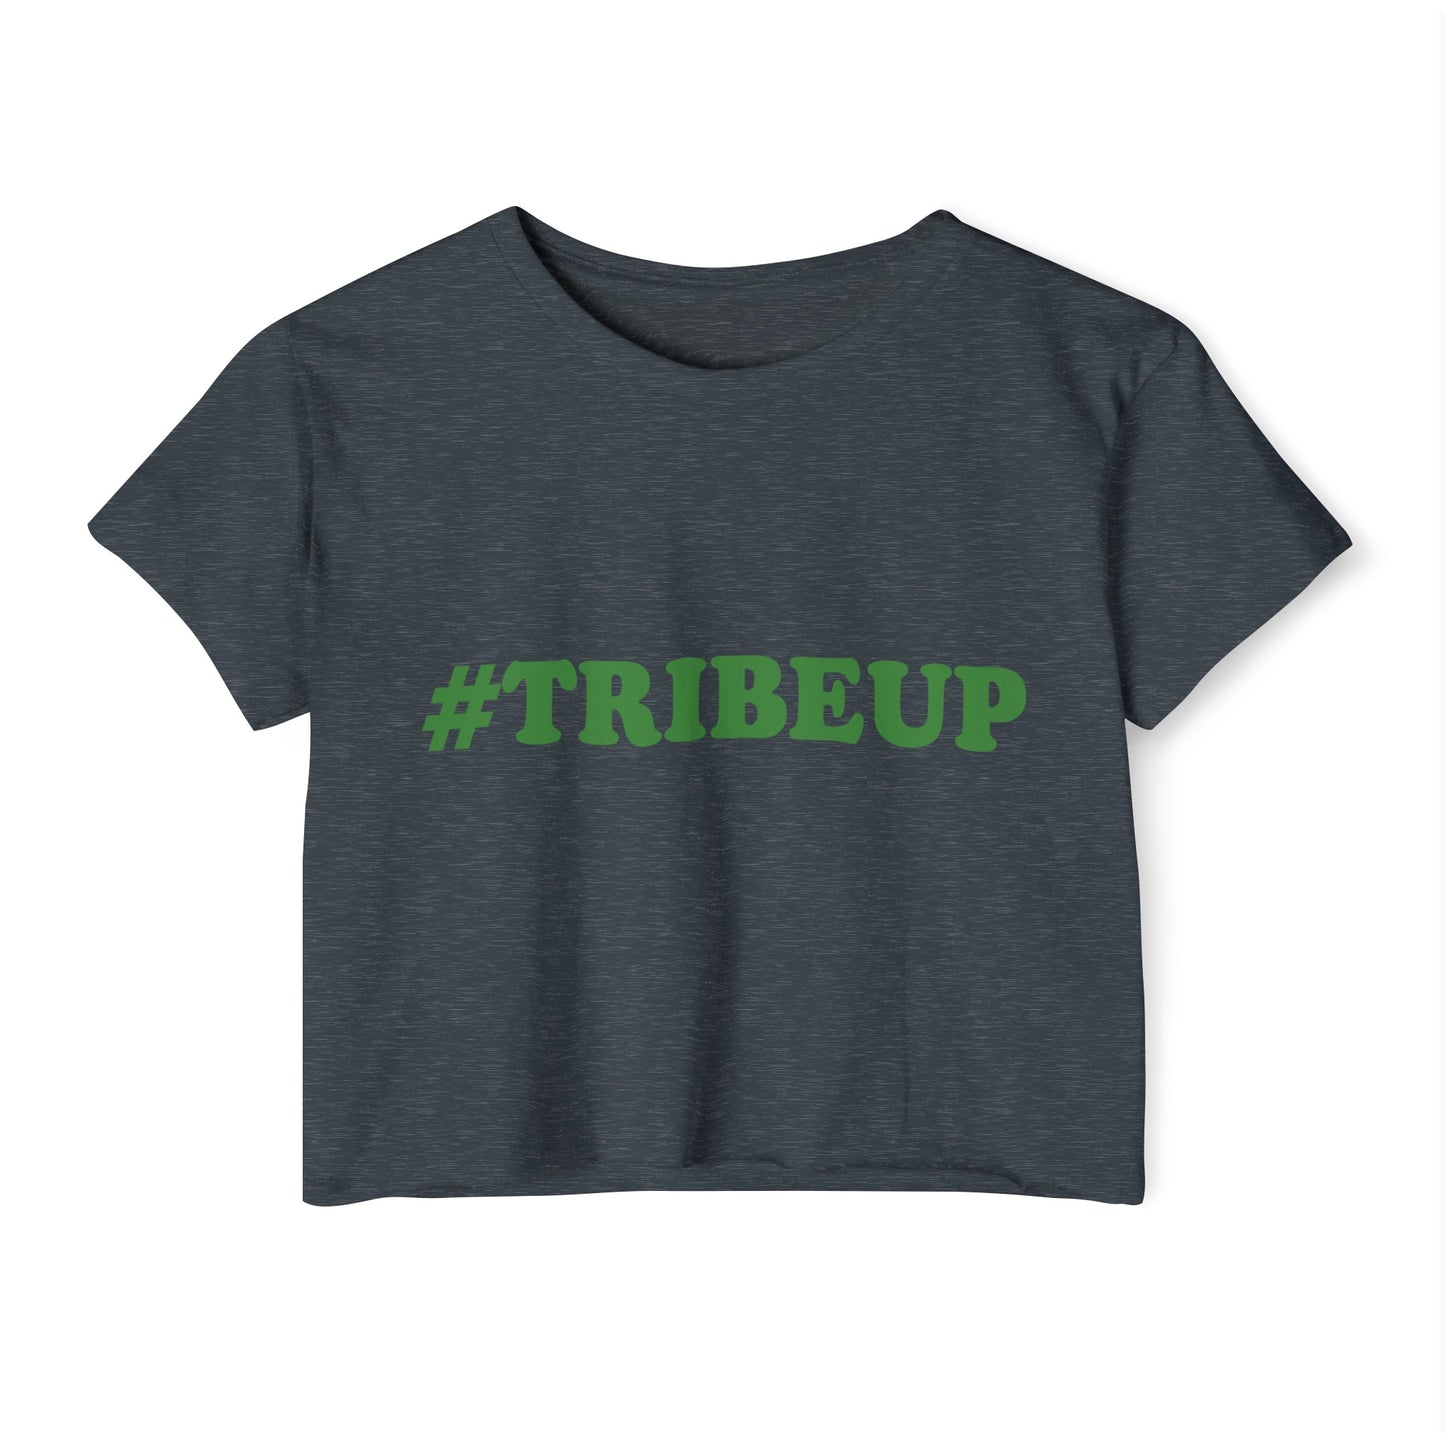 Tribe Up Crop Top